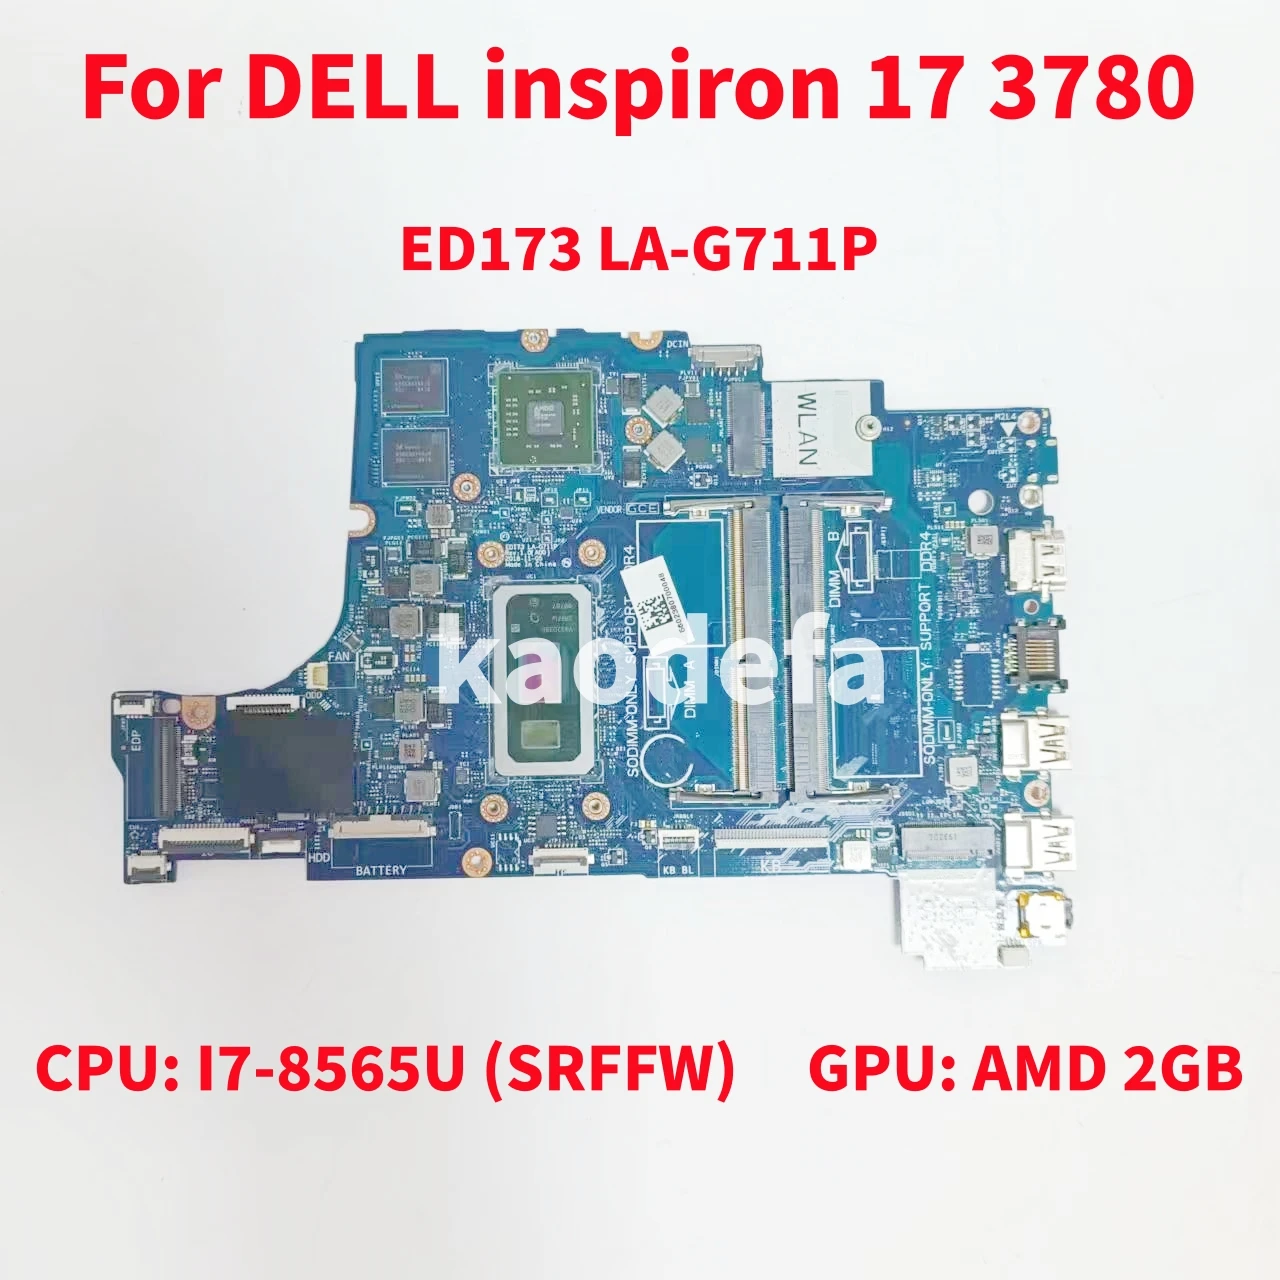 

ED173 LA-G711P Mainboard For Dell inspiron 17 3780 Laptop Motherboard CPU: I7-8565U SRFFW GPU: AMD 2GB 100% Test OK